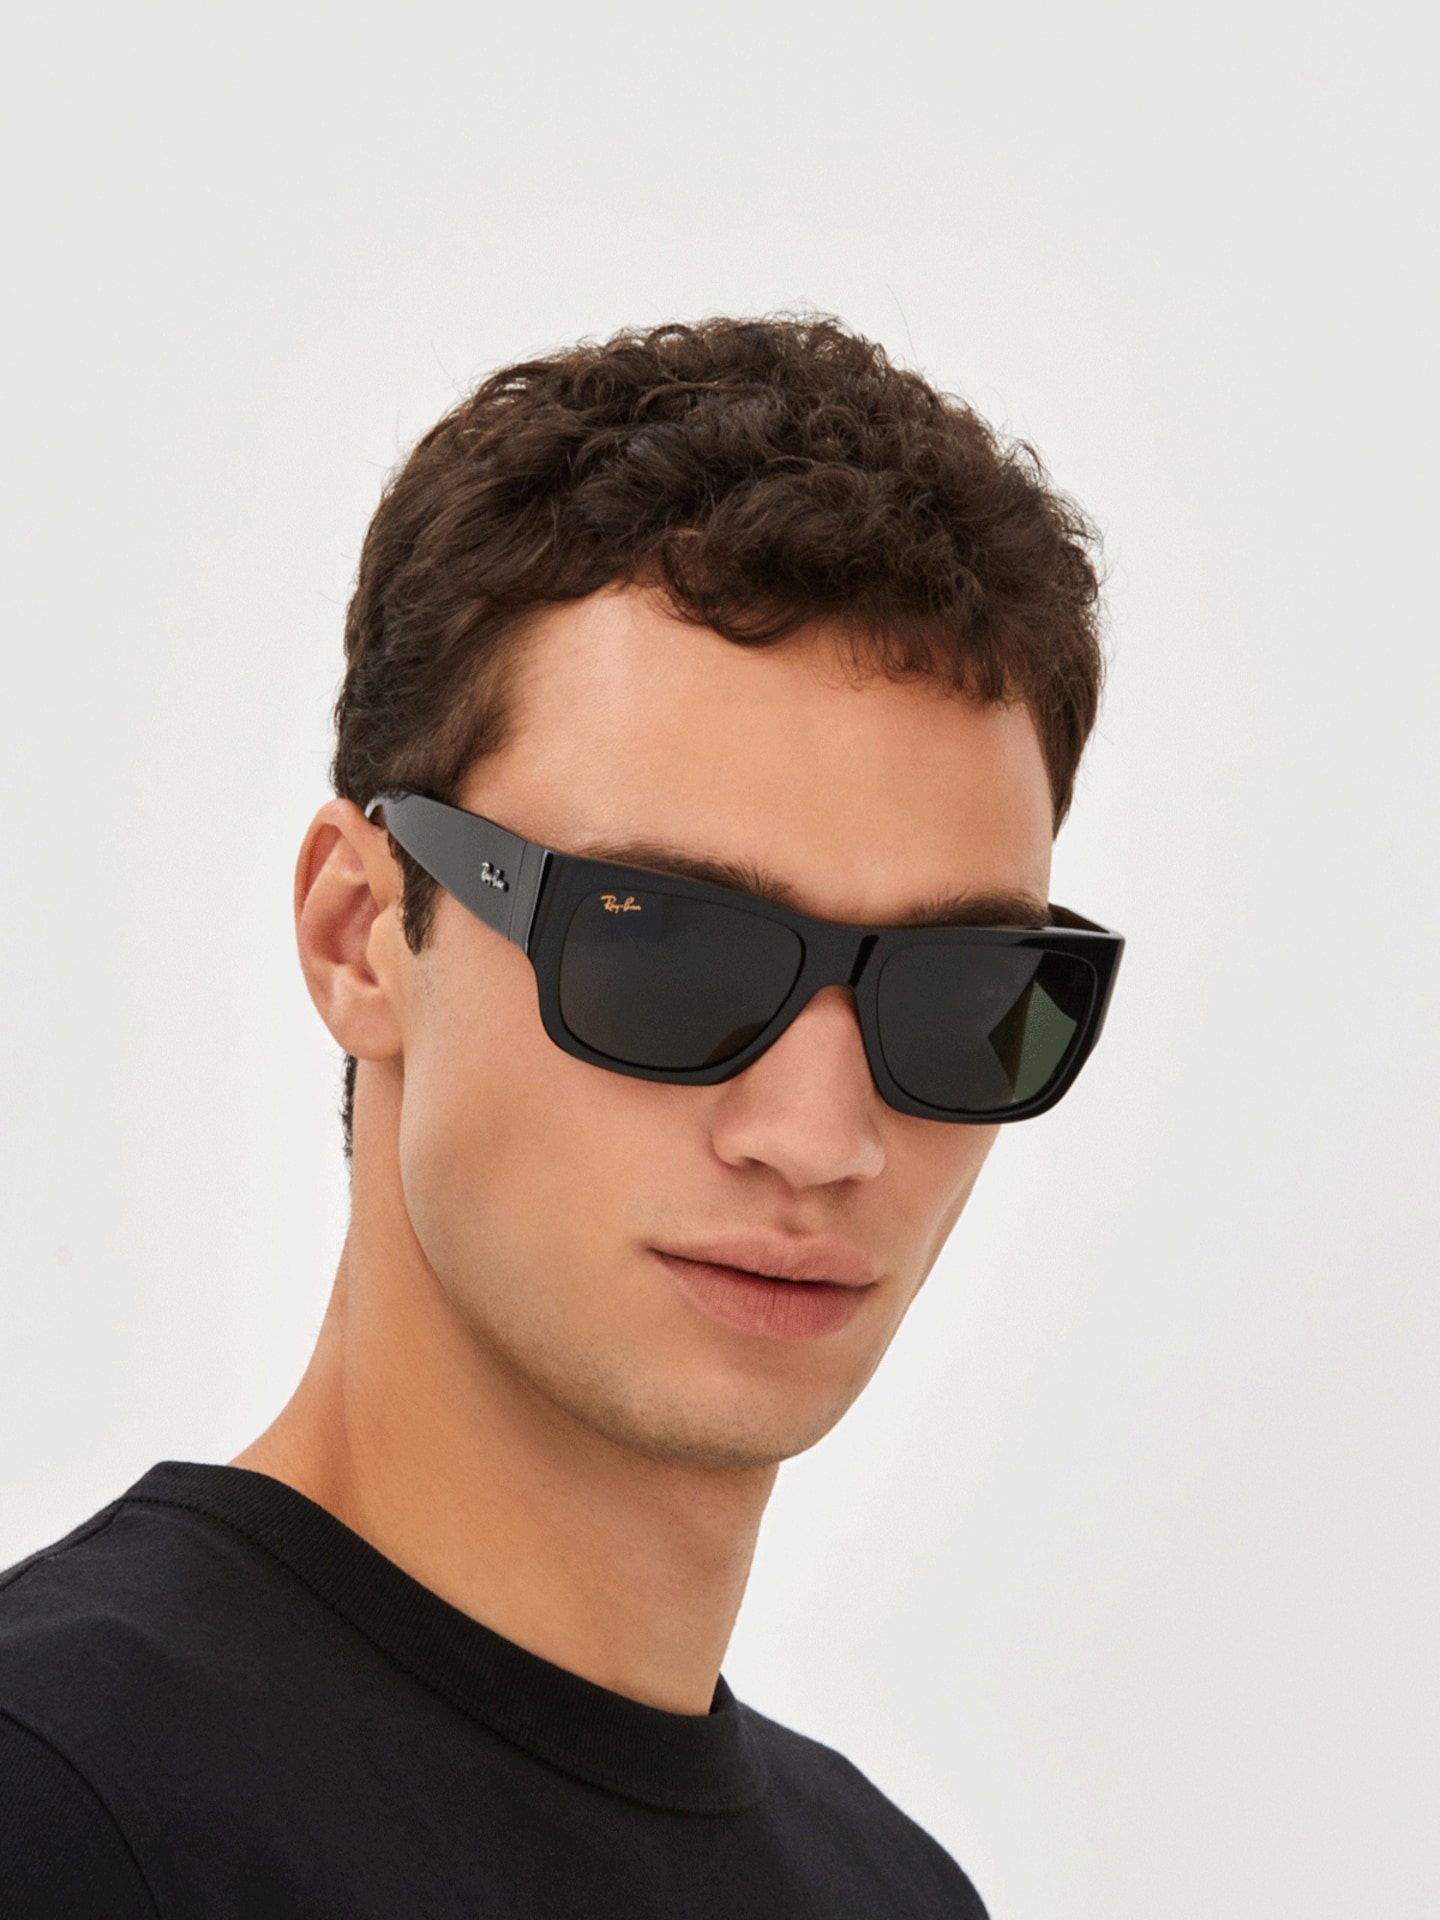 Fotoelektrisch Voorwaarden President Ray-Ban Black Sunglasses | Glasses.com® | Free Shipping